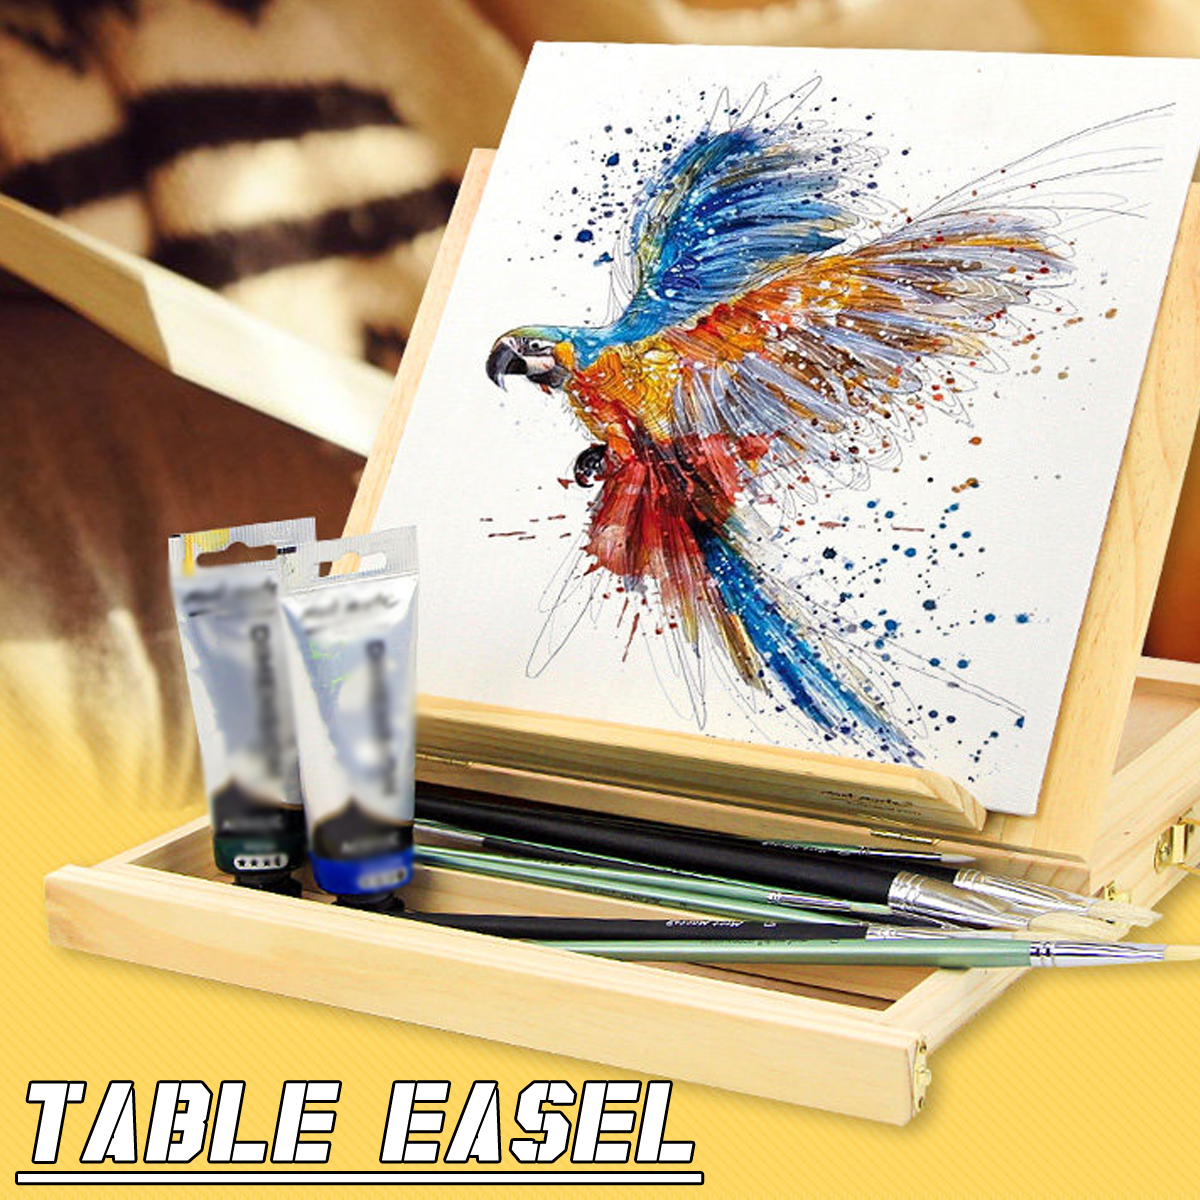 Table-Easel-Drawer-Pine-Wood-Artist-Easel-Painting-Stand-Craft-Art-Sketching-Box-Board-Desktop-Durab-1631672-1